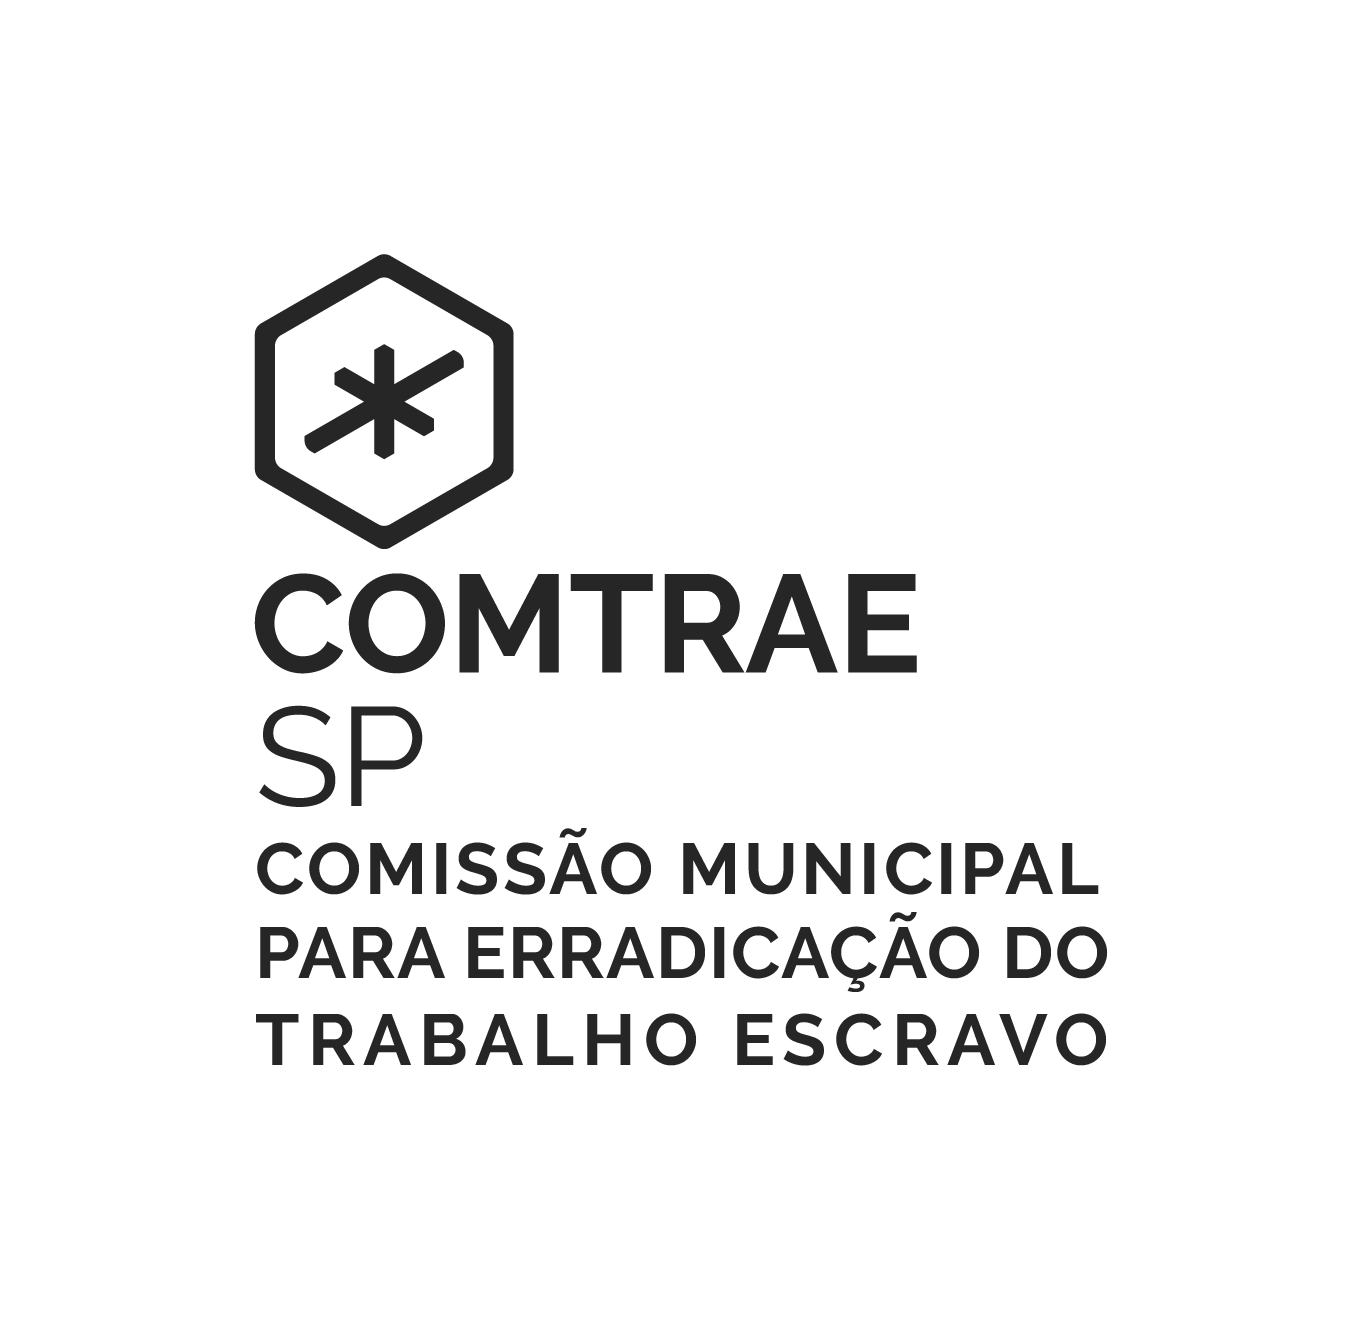 São Paulo Municipal Commission for the Eradication of Slave Labor